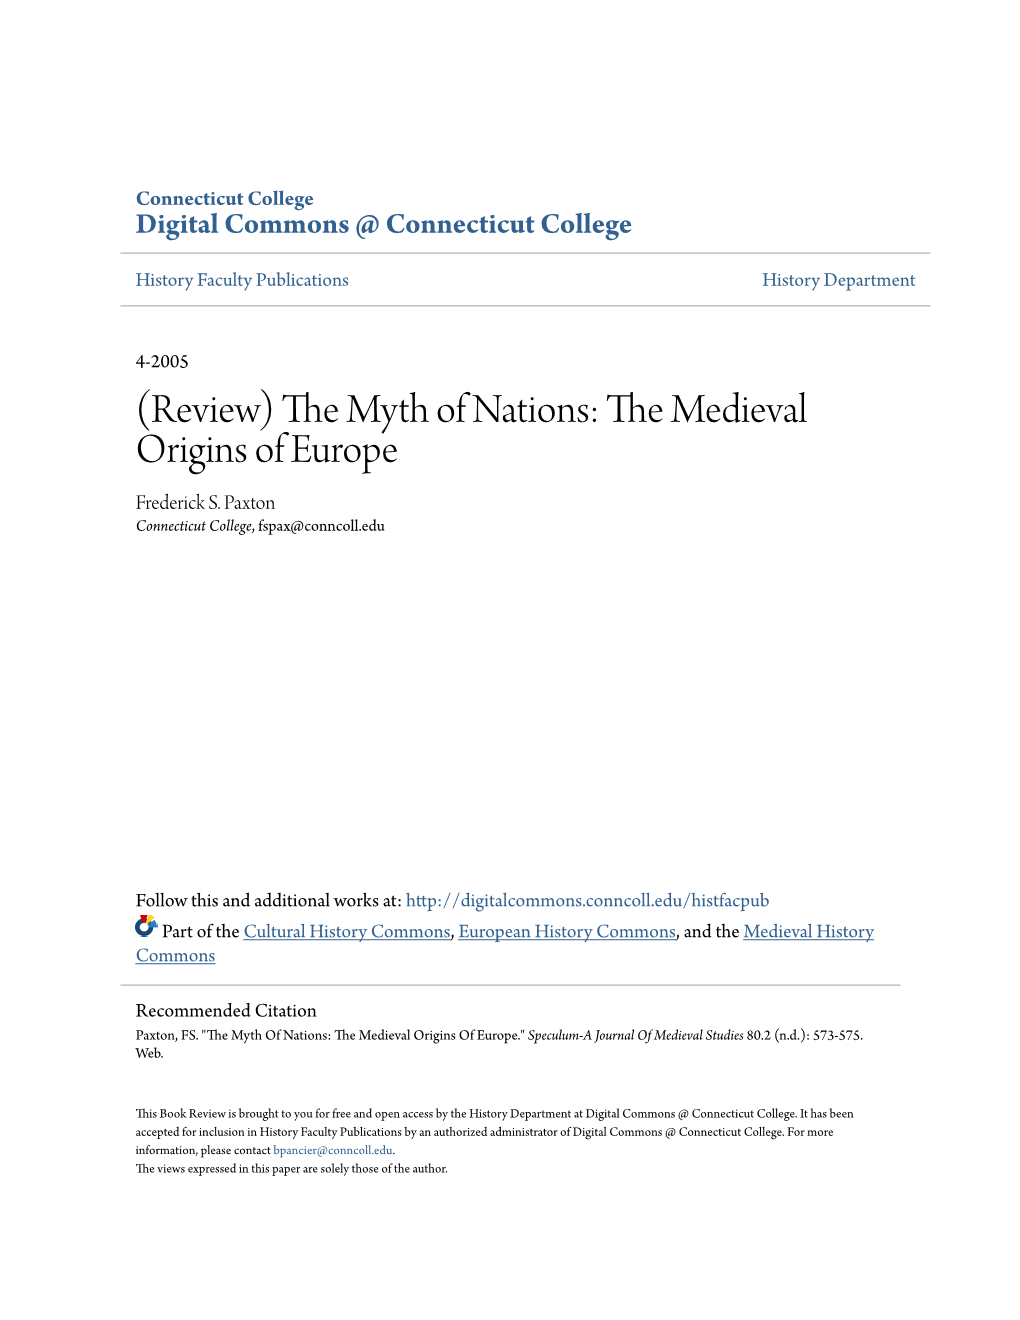 The Medieval Origins of Europe